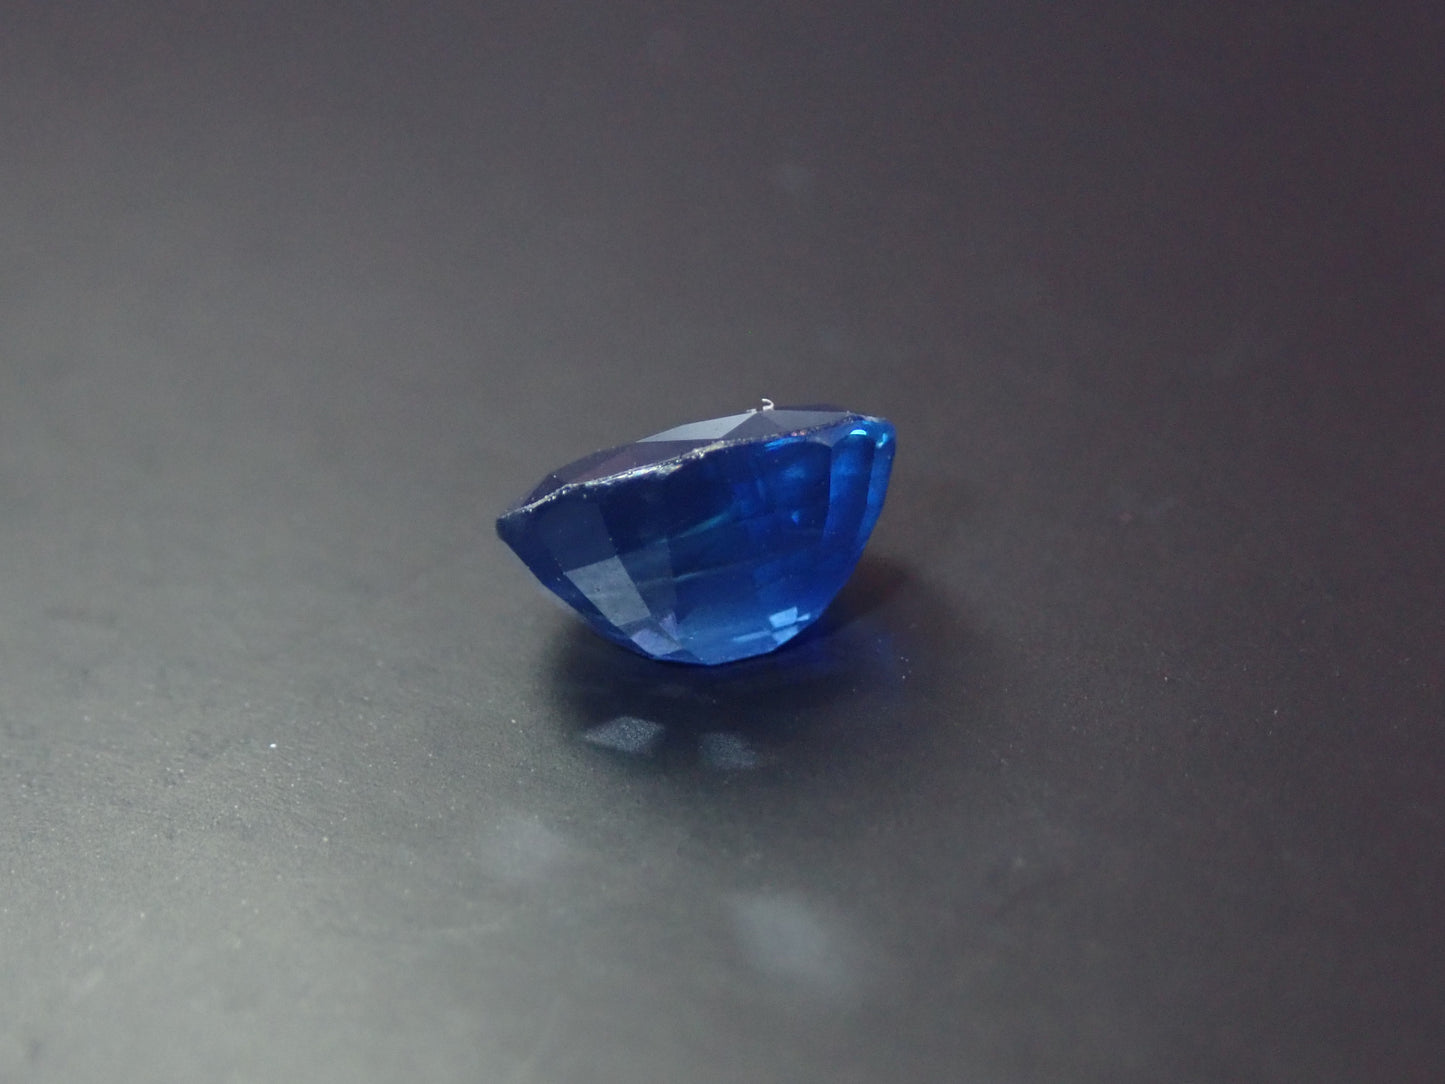 Blue sapphire 2.956ct